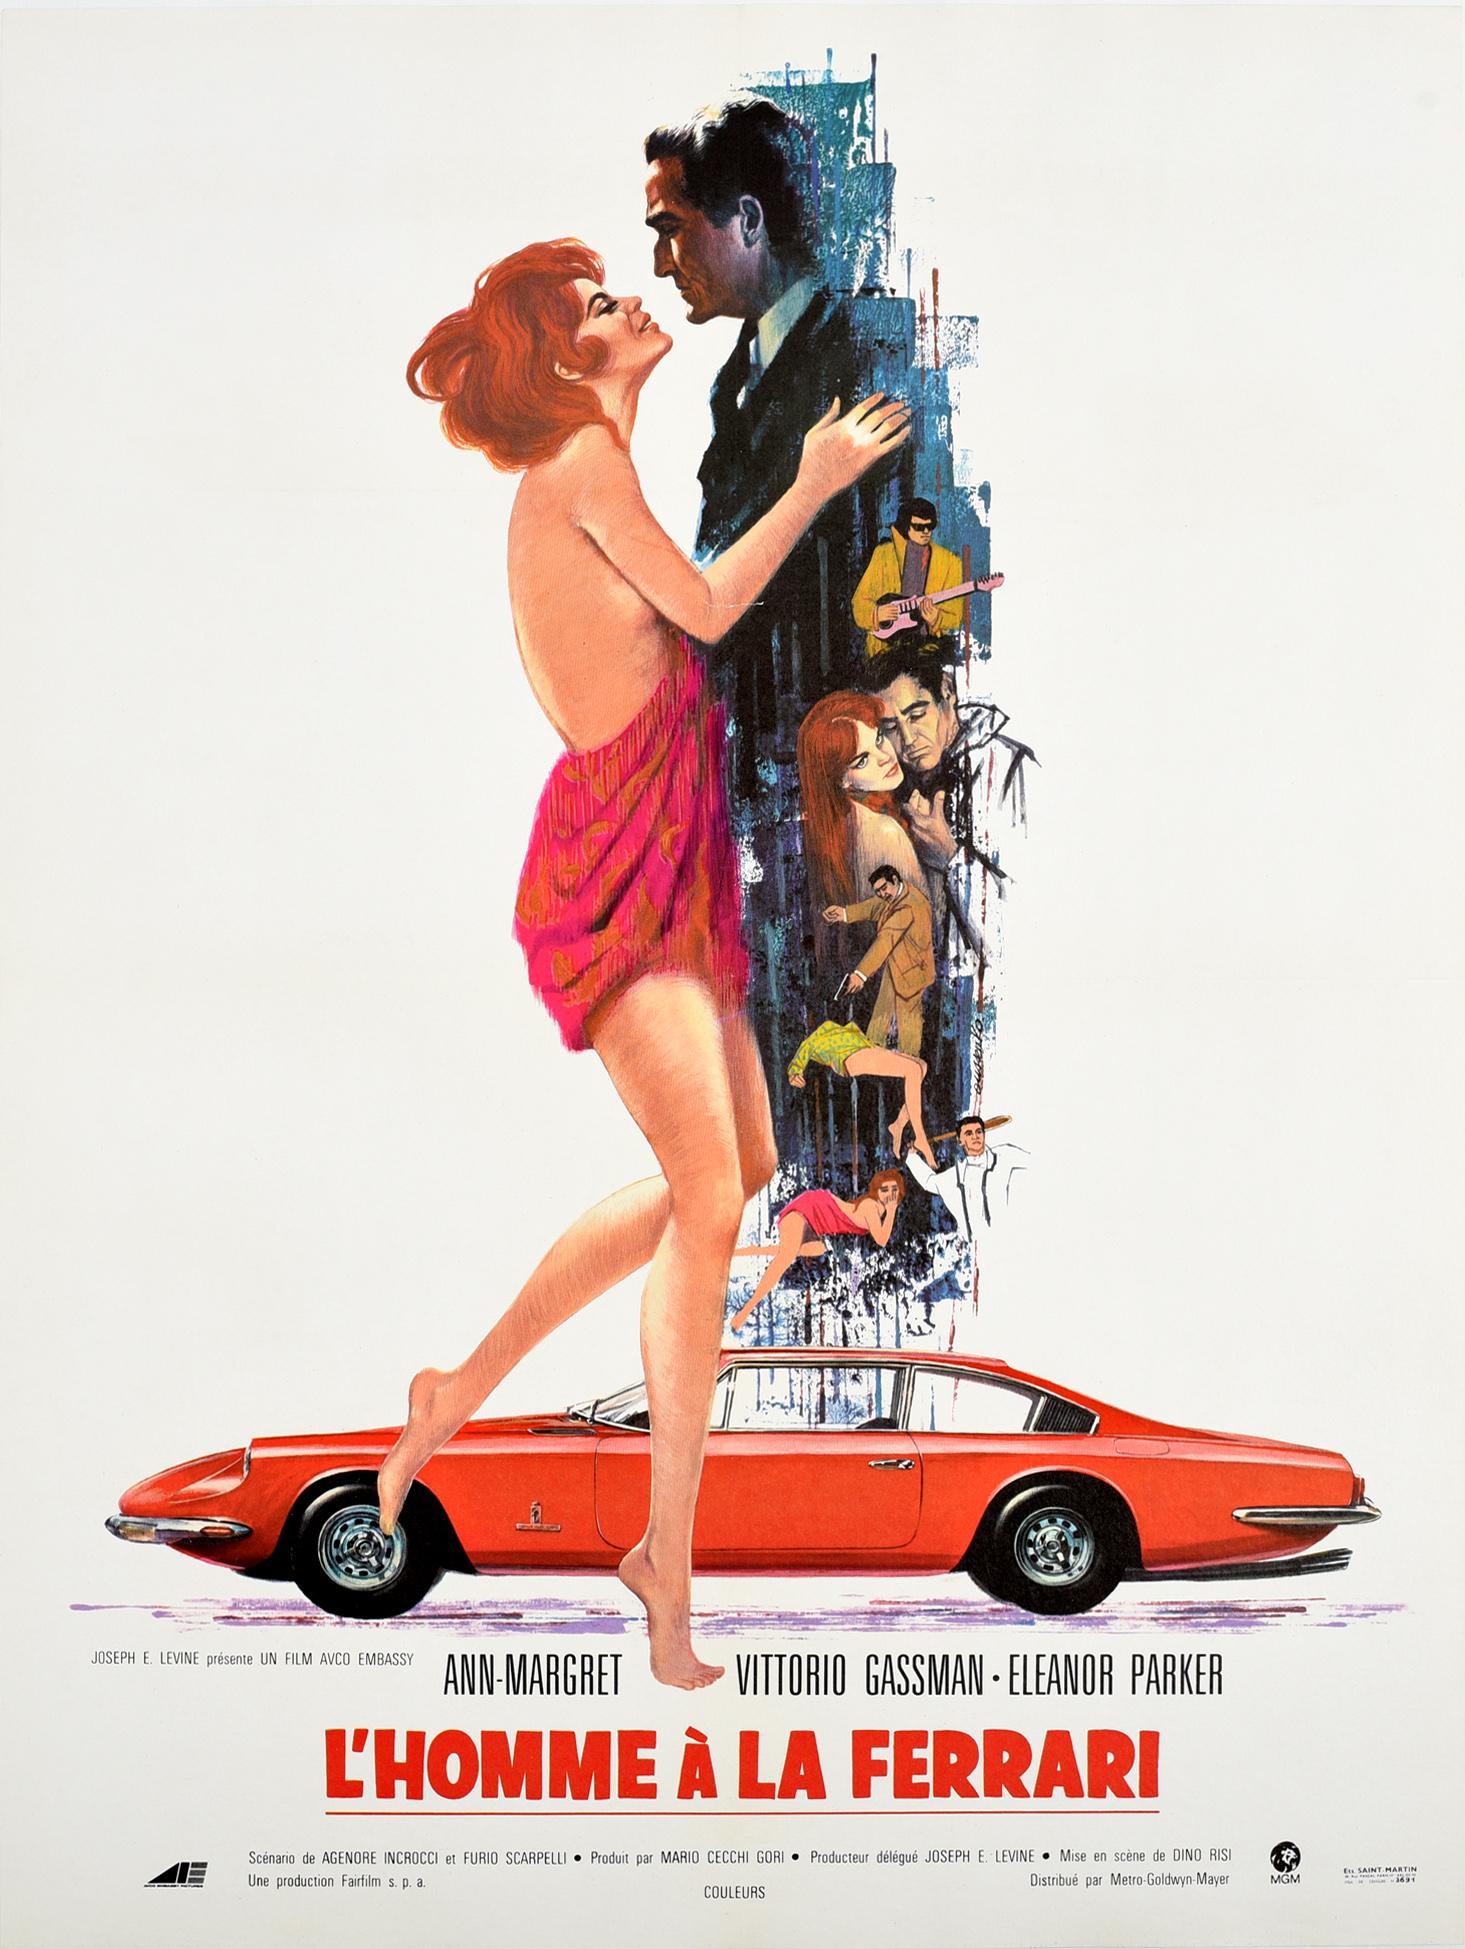 Bussenko Print - Original Vintage Film Poster For L'Homme A La Ferrari The Tiger And The Pussycat